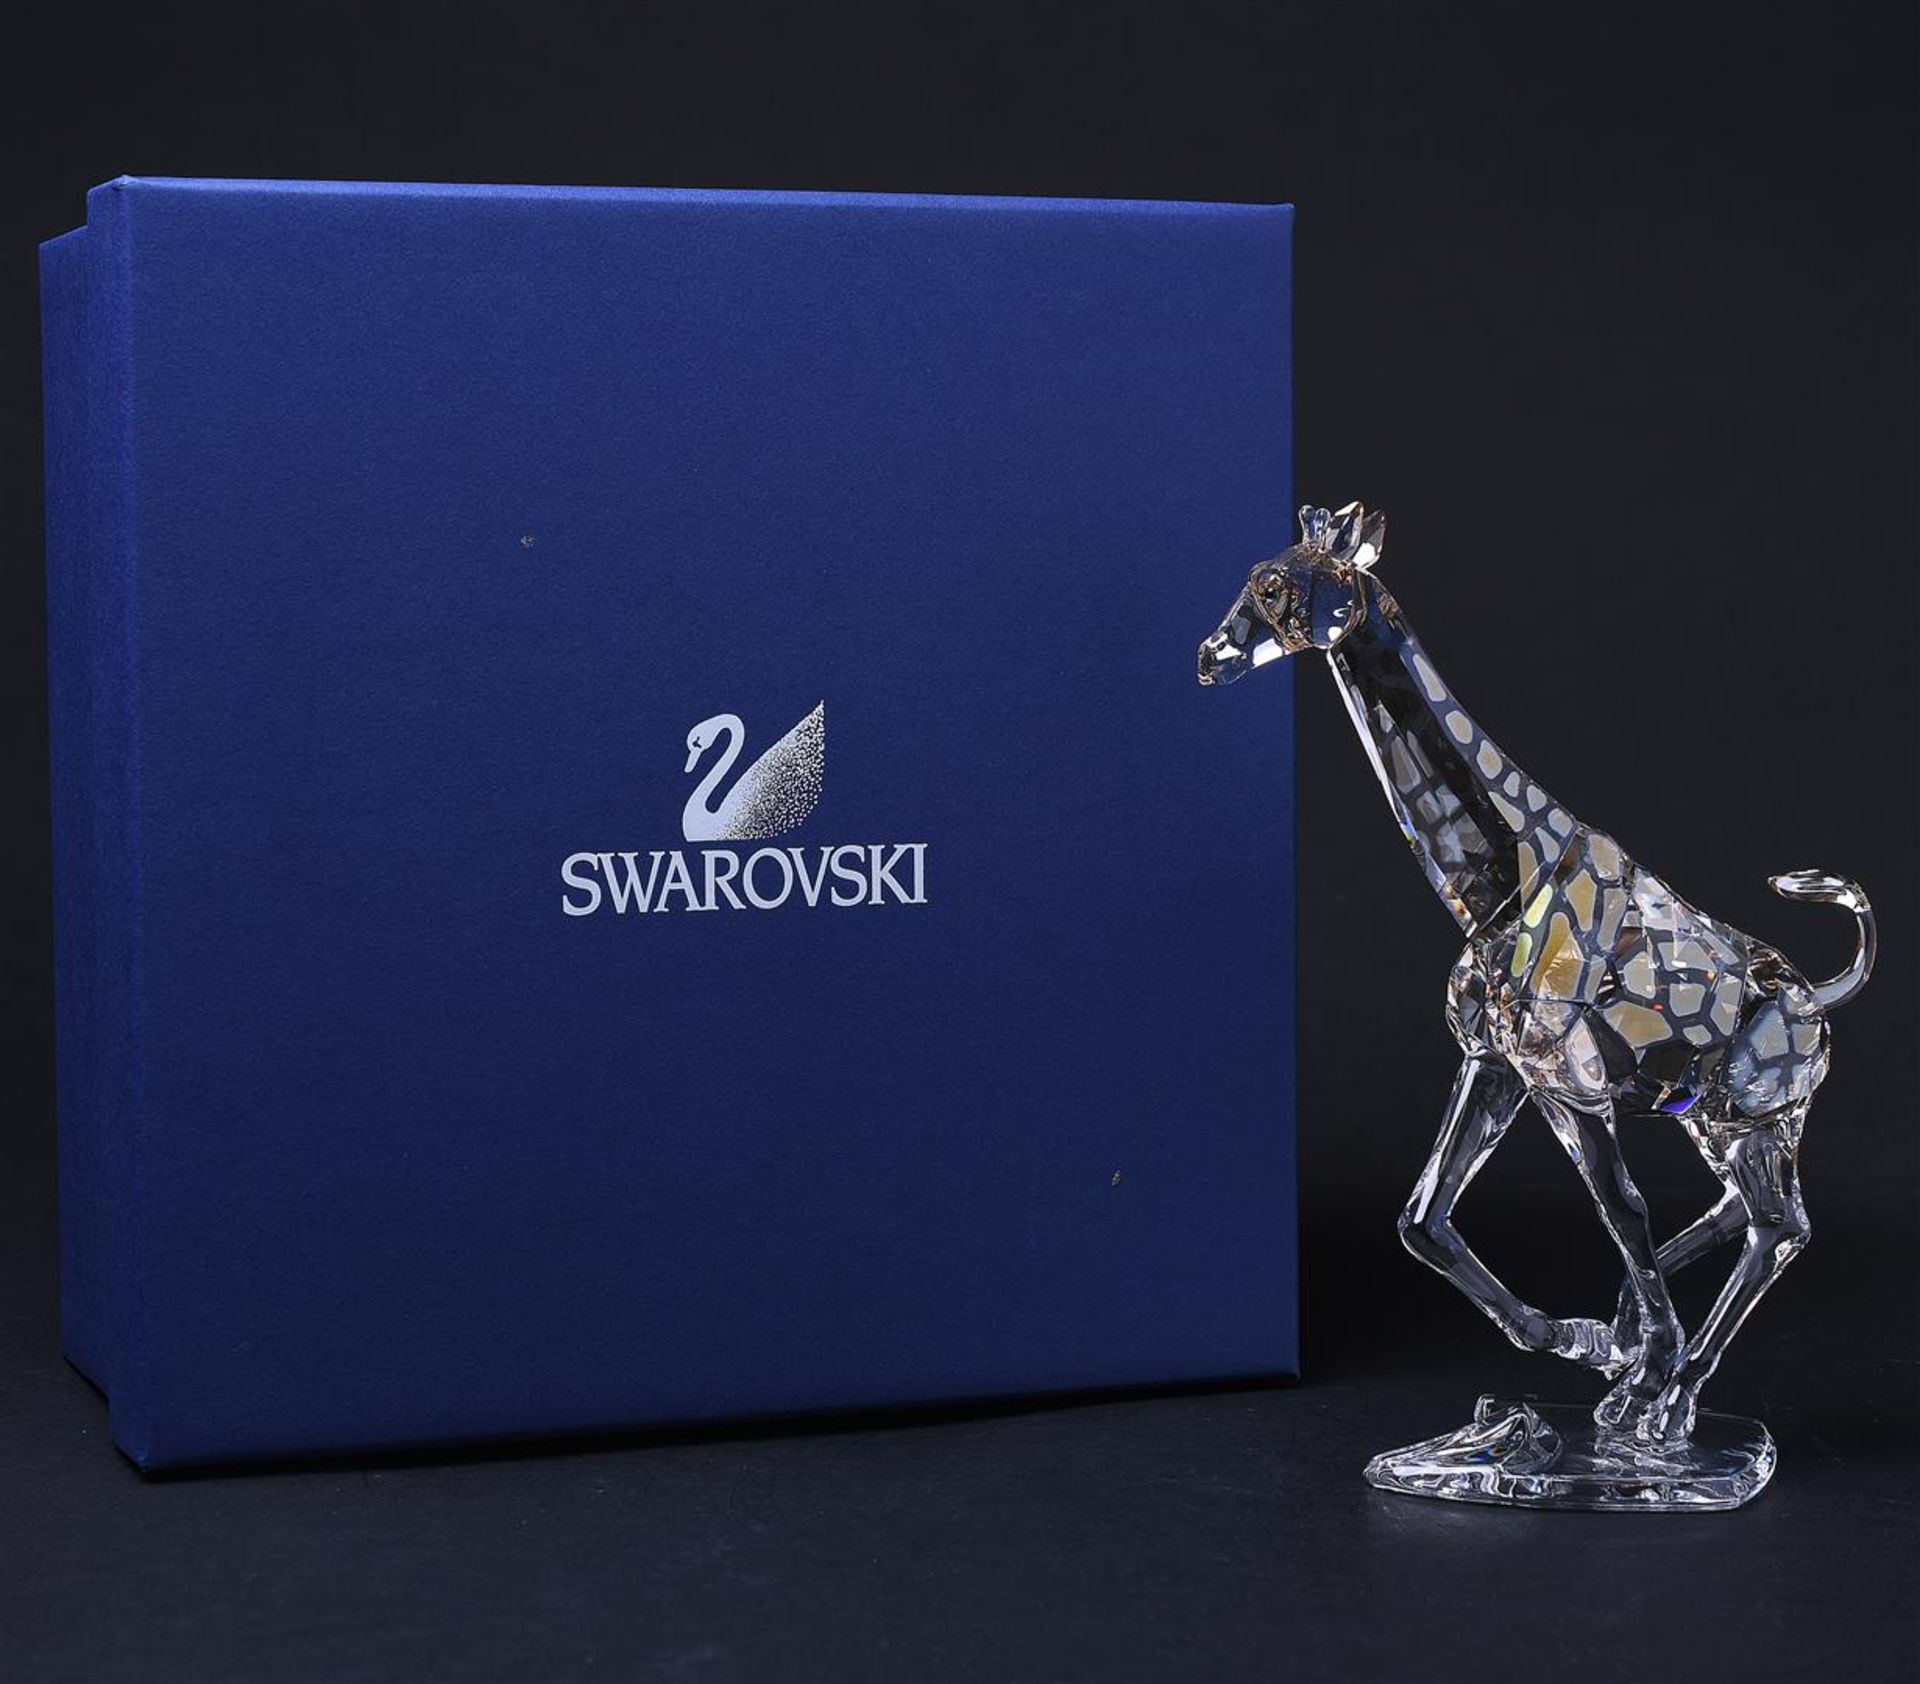 Swarovski, Giraffe, Year of Release 2012, 935896. Includes original box.
17 x 12 cm. - Image 8 of 8